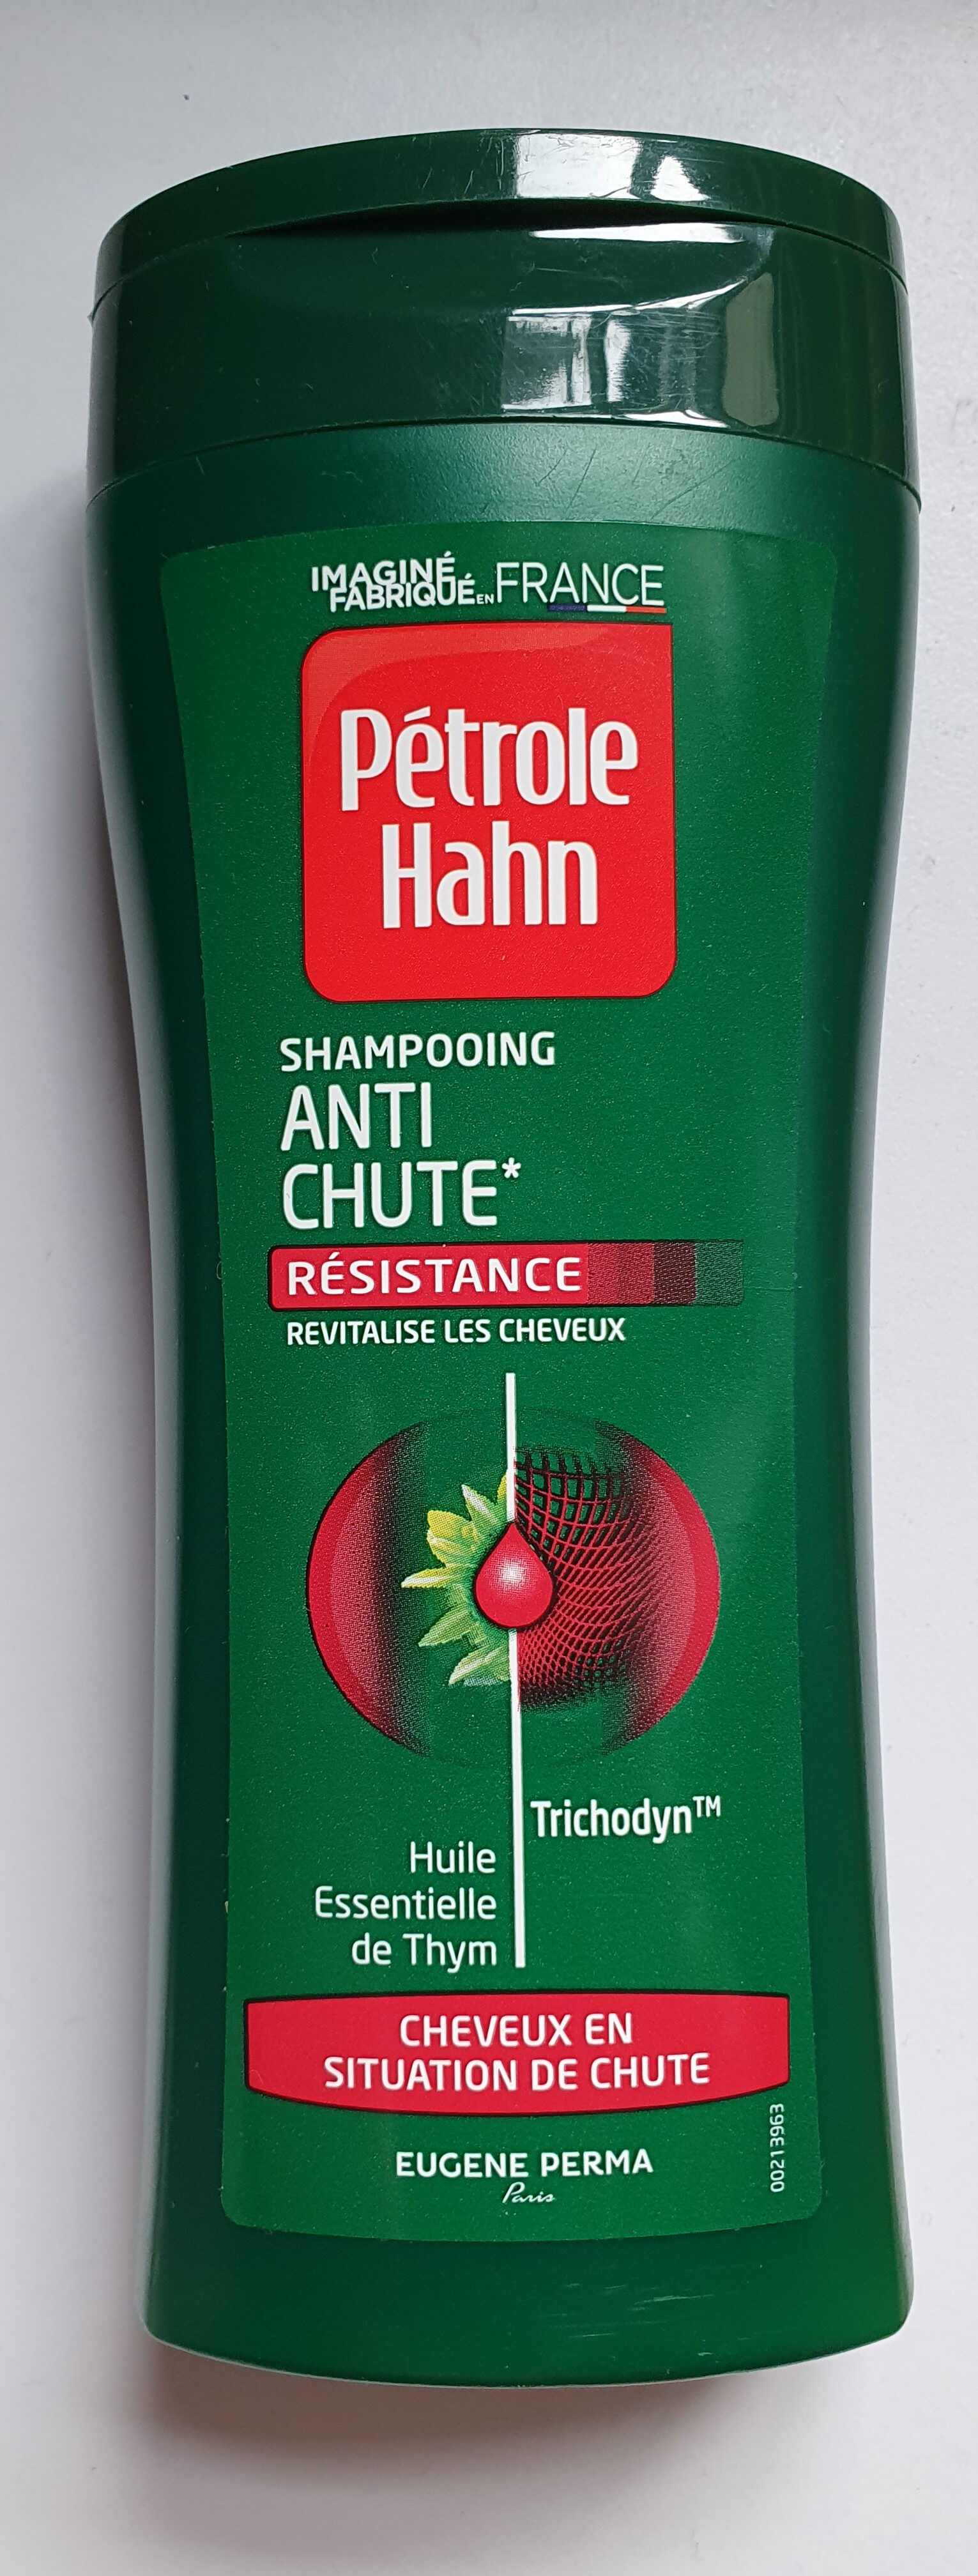 Shampooing anti chute - Product - fr